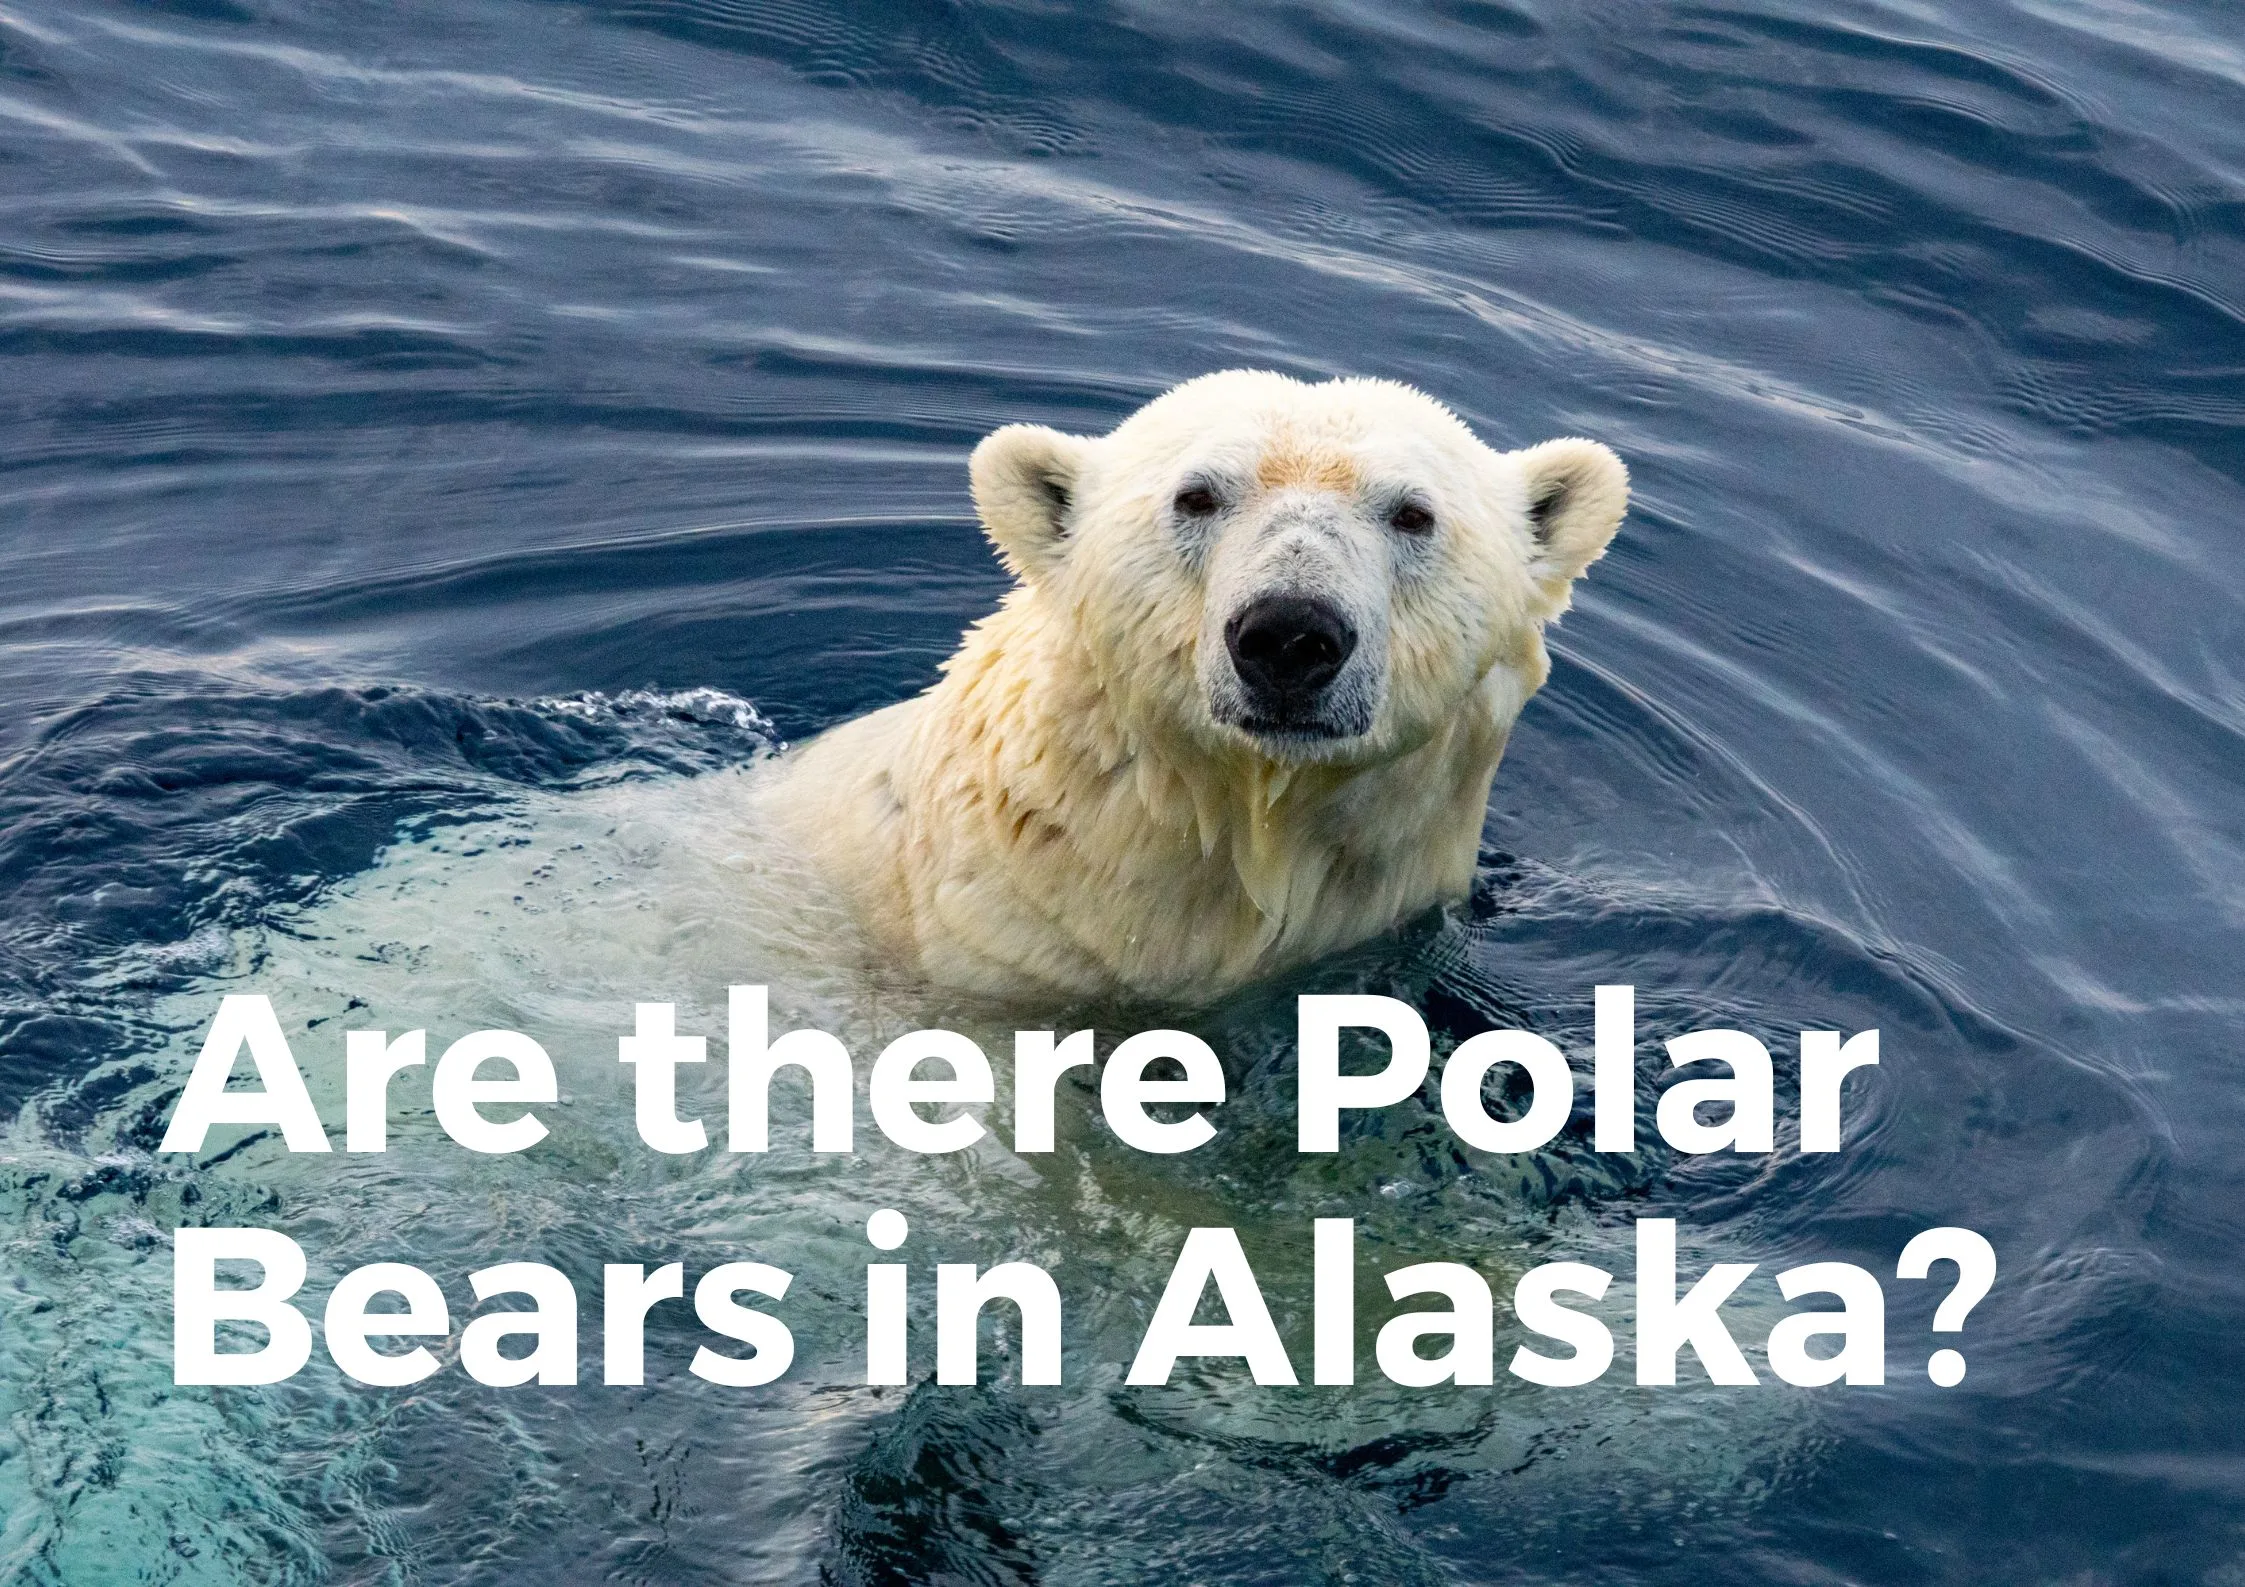 Are there polar bears in Alaska